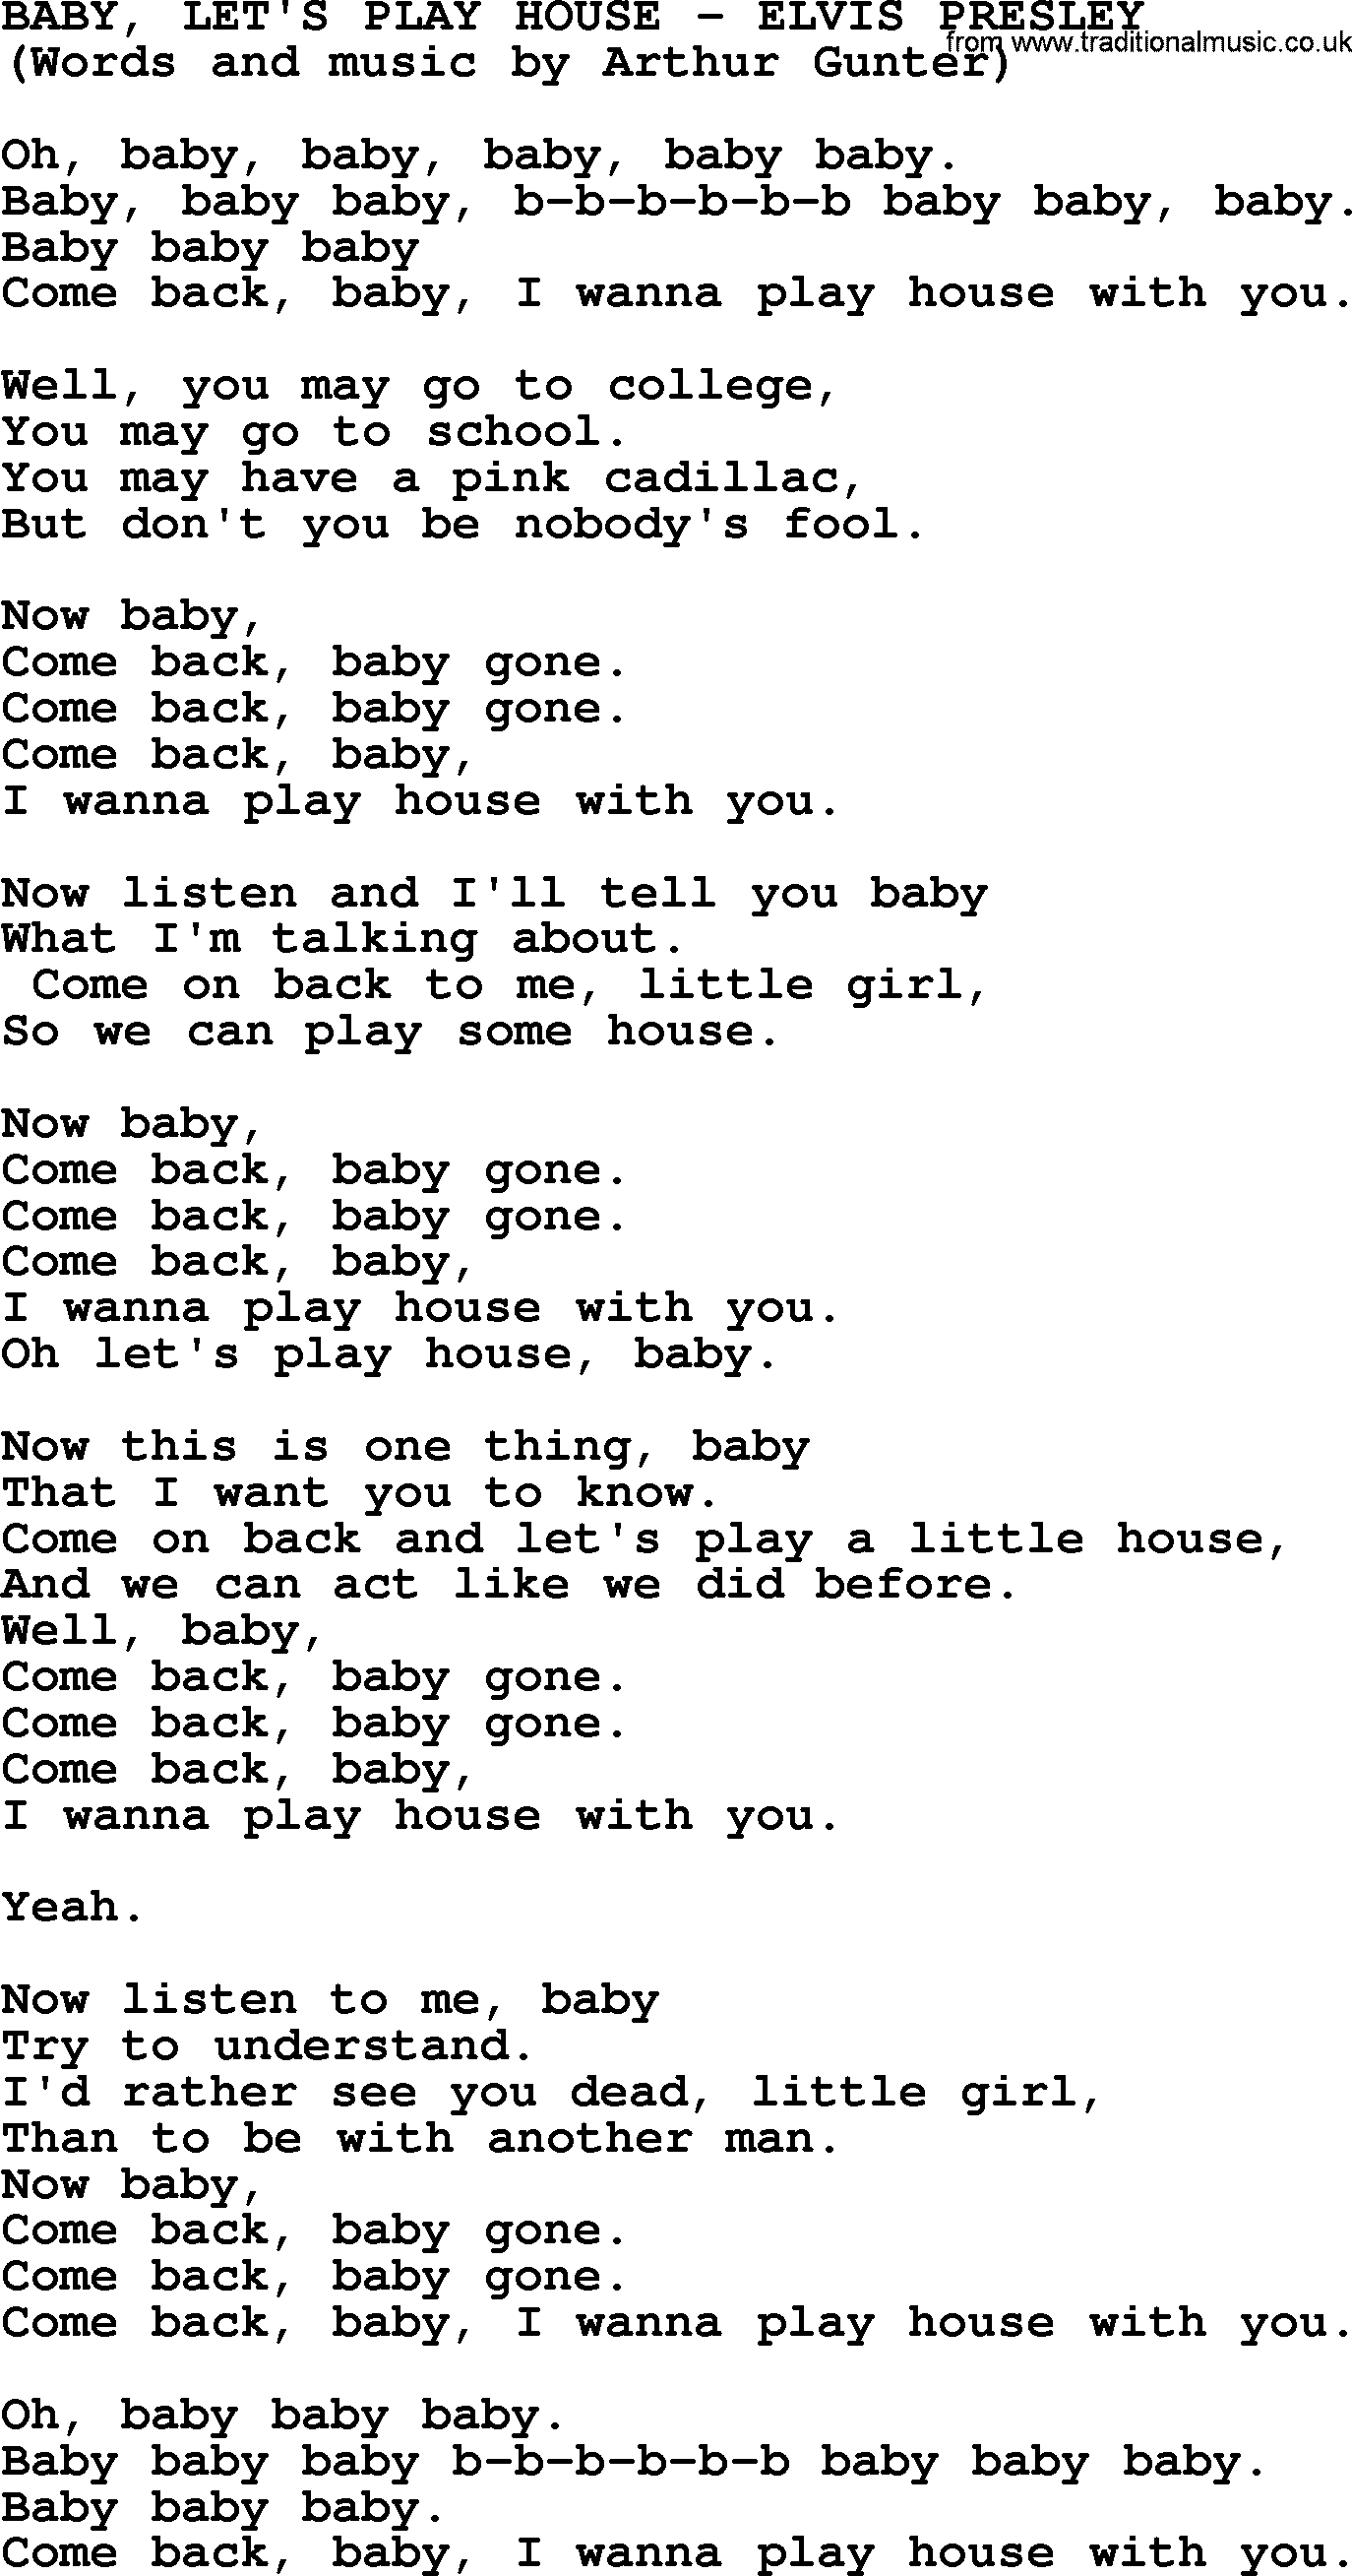 Elvis Presley song: Baby, Let's Play House lyrics